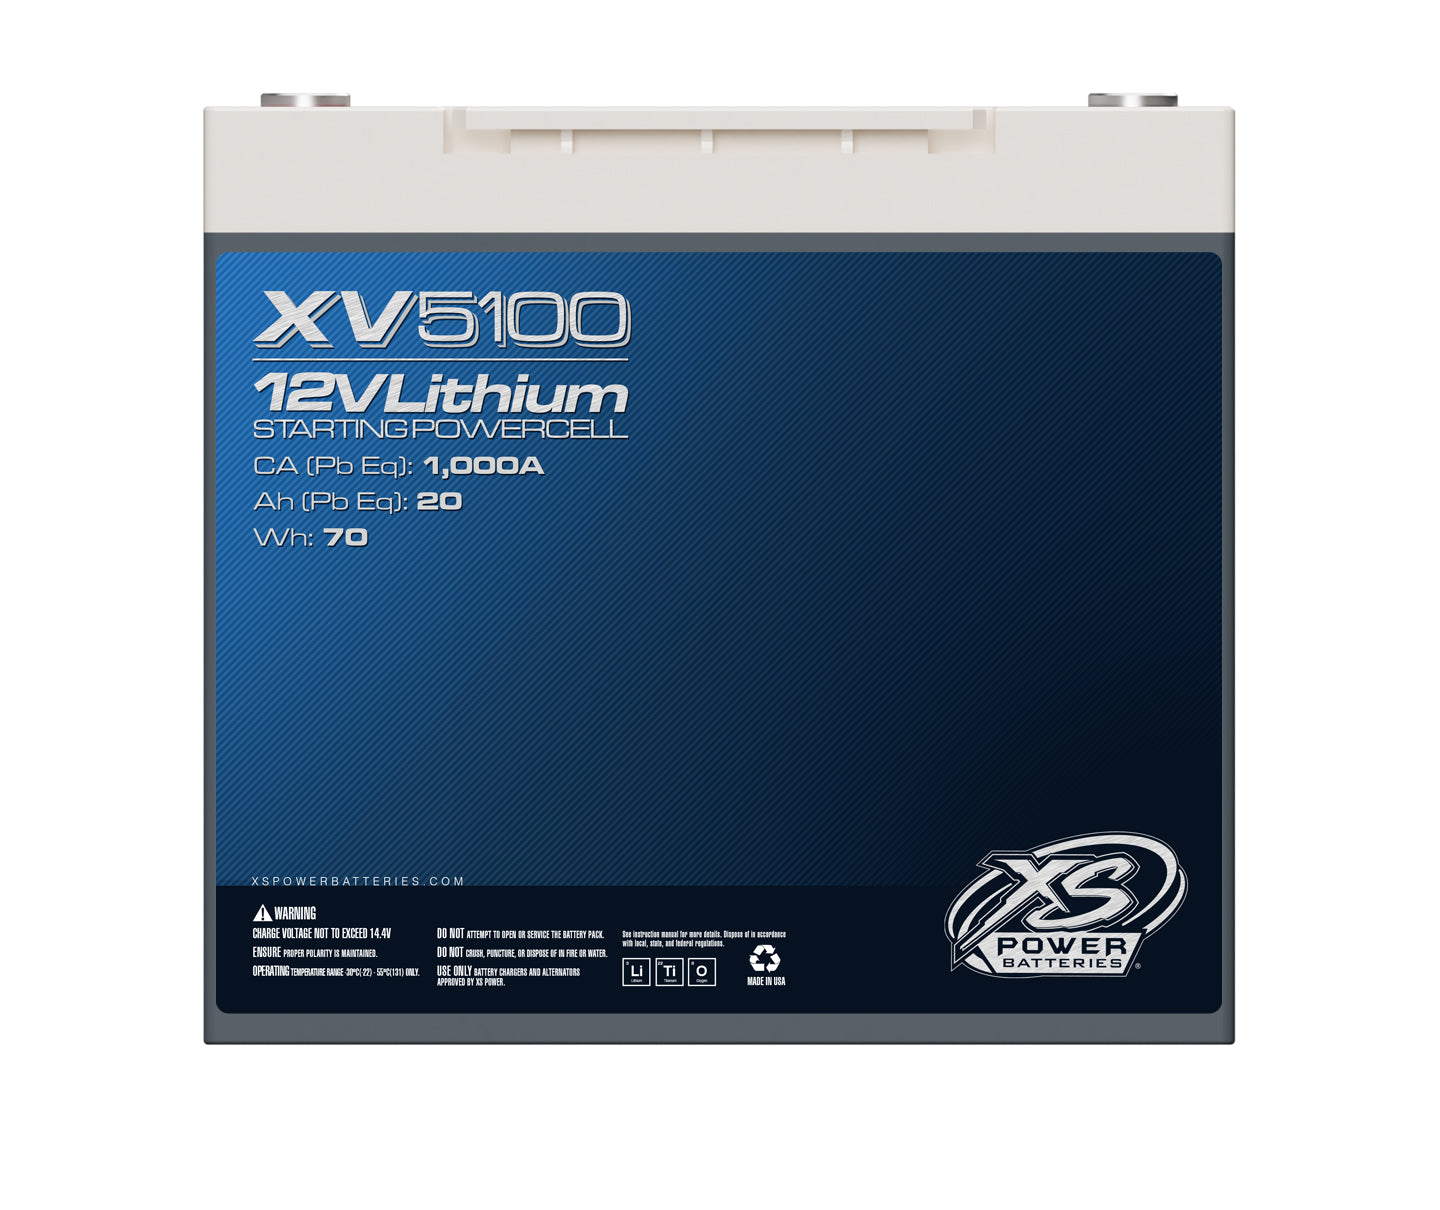 XV5100 XS Power 12VDC Group 51 Lithium LTO Underhood-Safe Vehicle Battery 1500W 70Wh